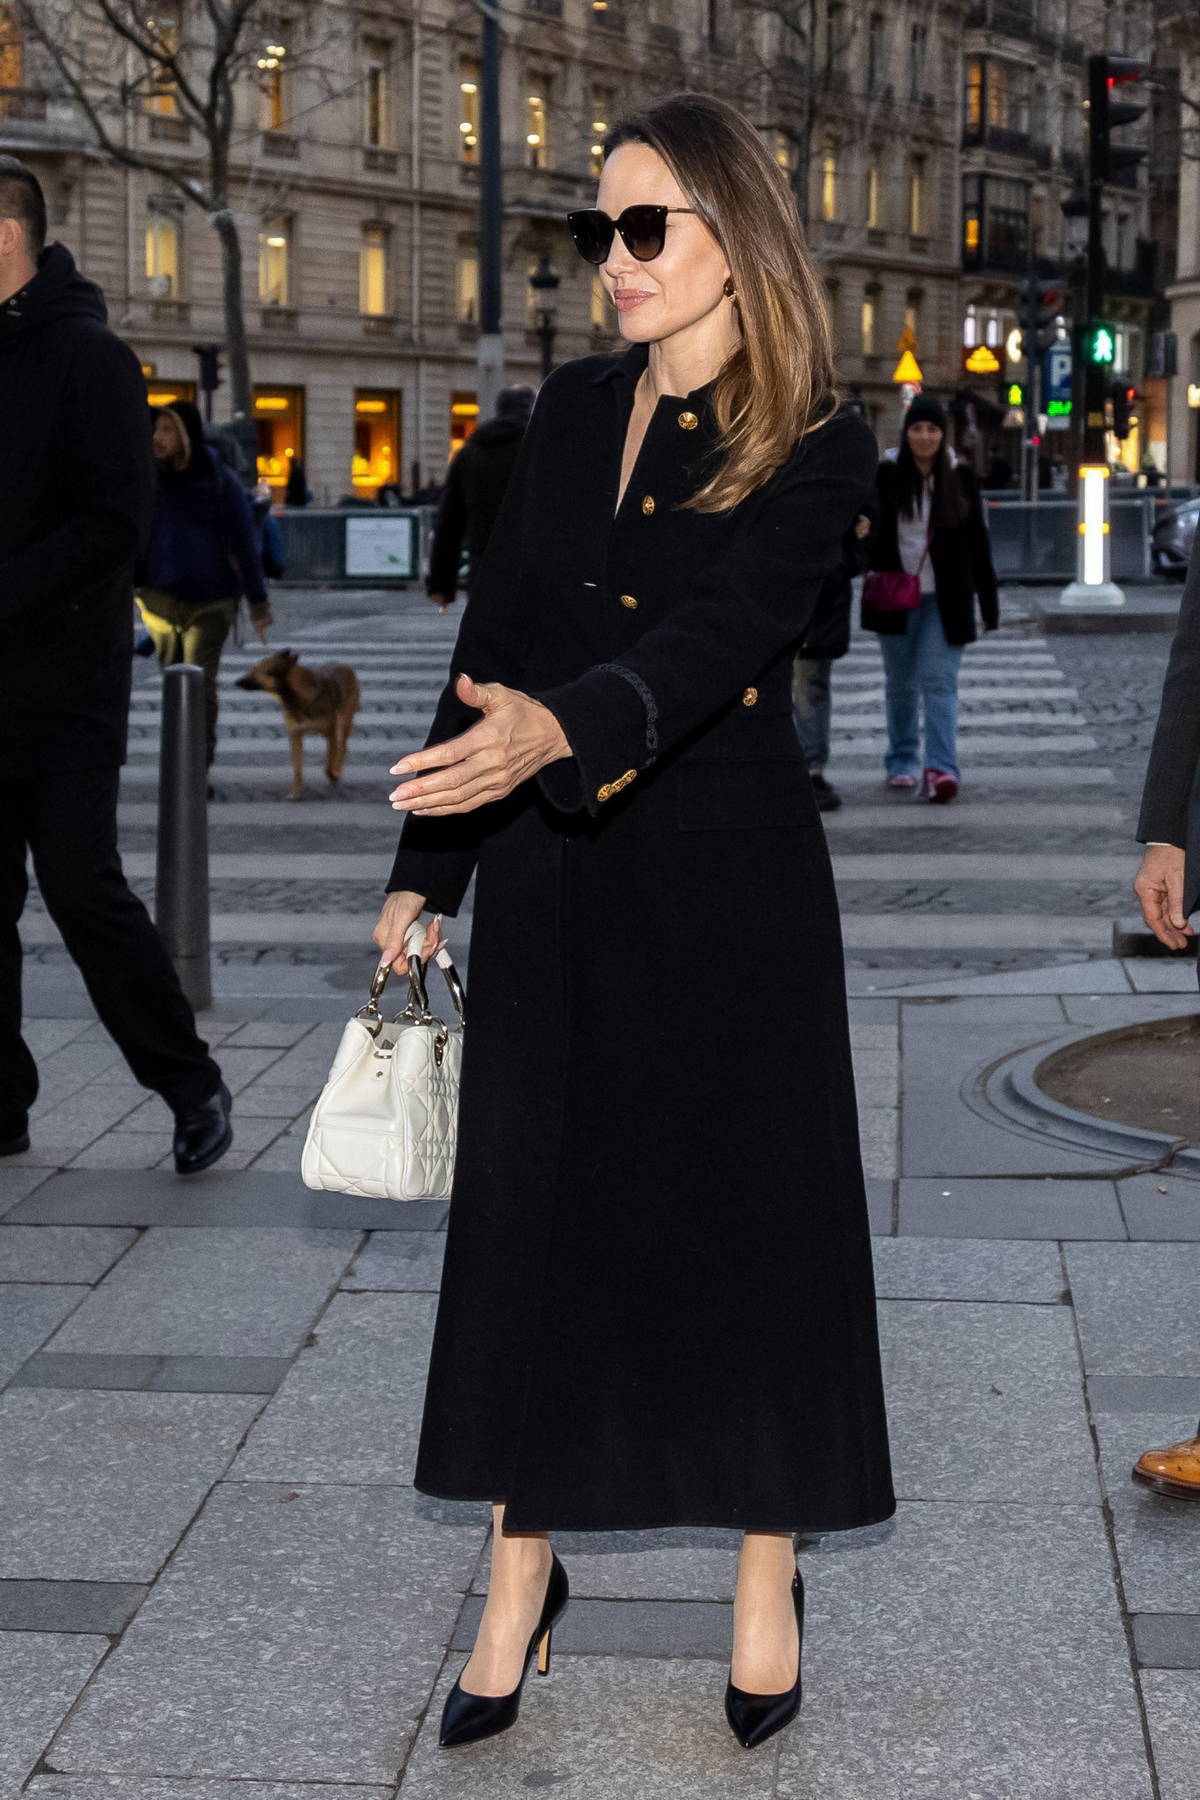 Angelina Jolie Looks Classy in All Black for Guerlain Event: Photo 4663838, Angelina Jolie Photos